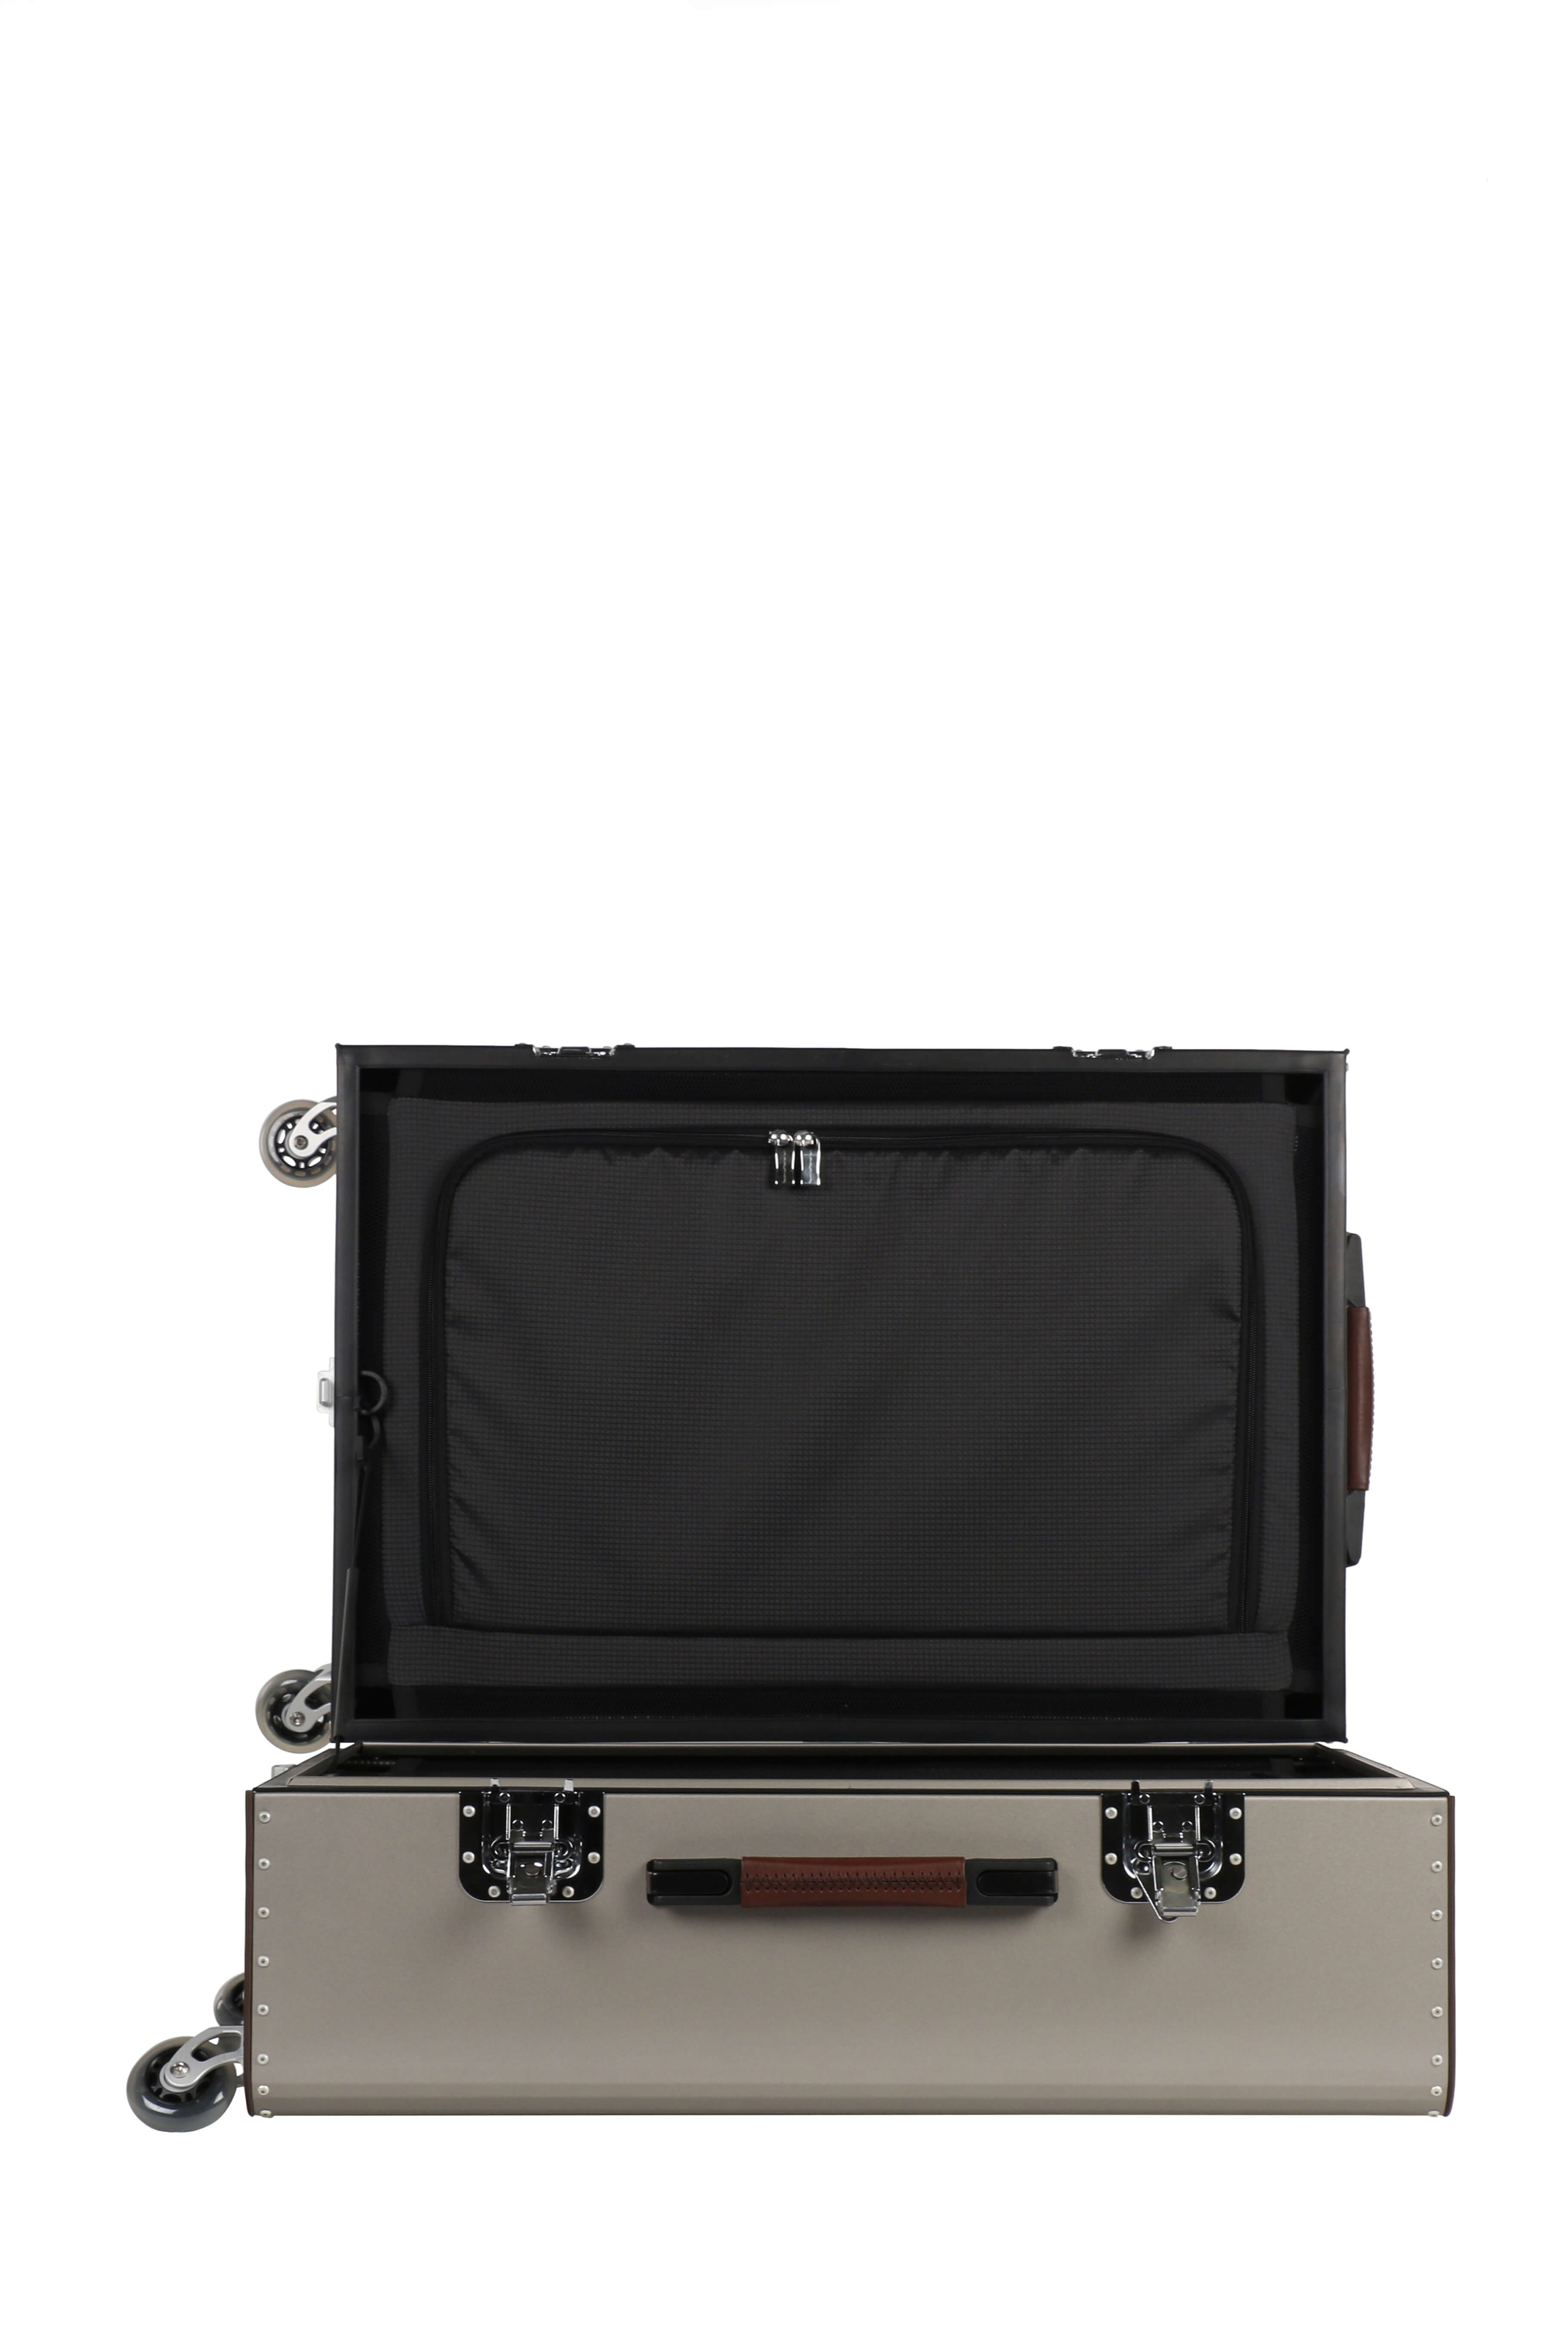 Kronos Titanium Check-In Luggage, Chestnut